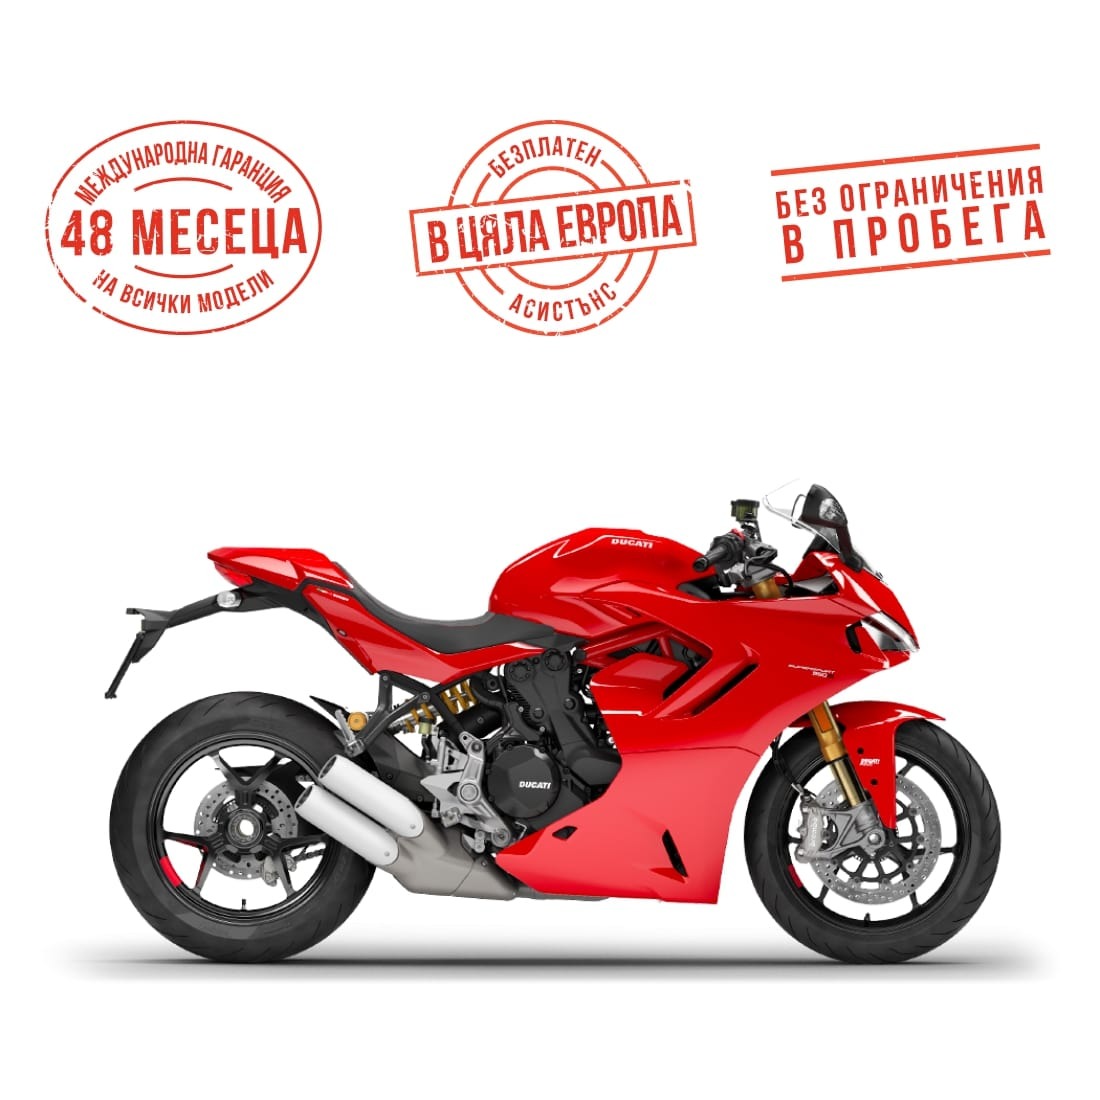 Ducati Supersport 950 S DUCATI RED - изображение 1